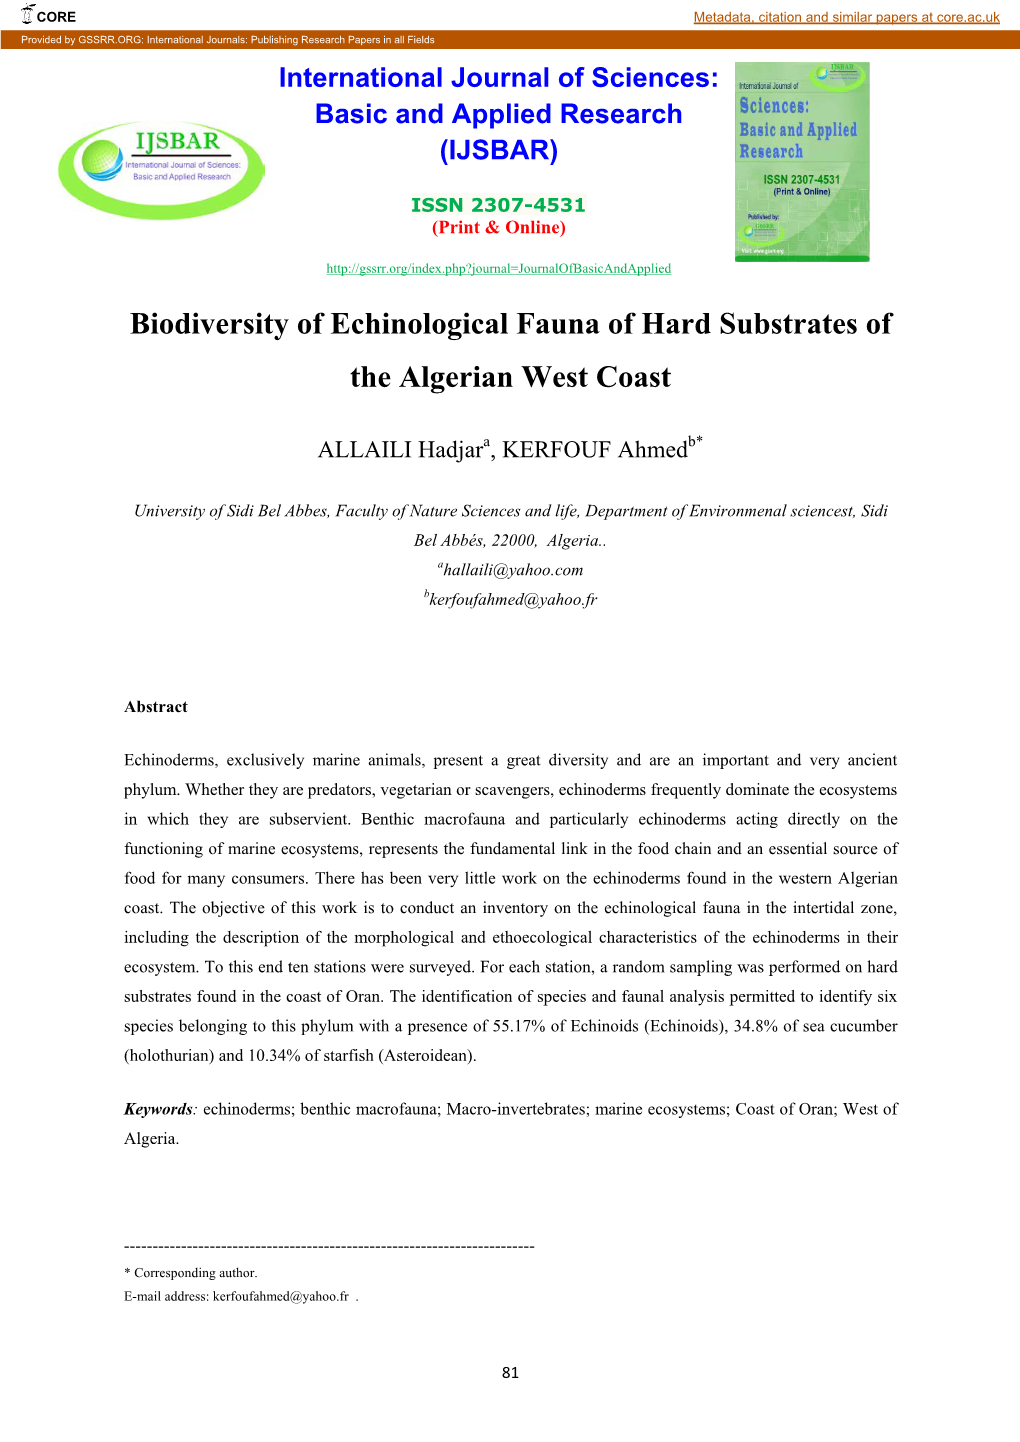 Biodiversity of Echinological Fauna of Hard Substrates of the Algerian West Coast